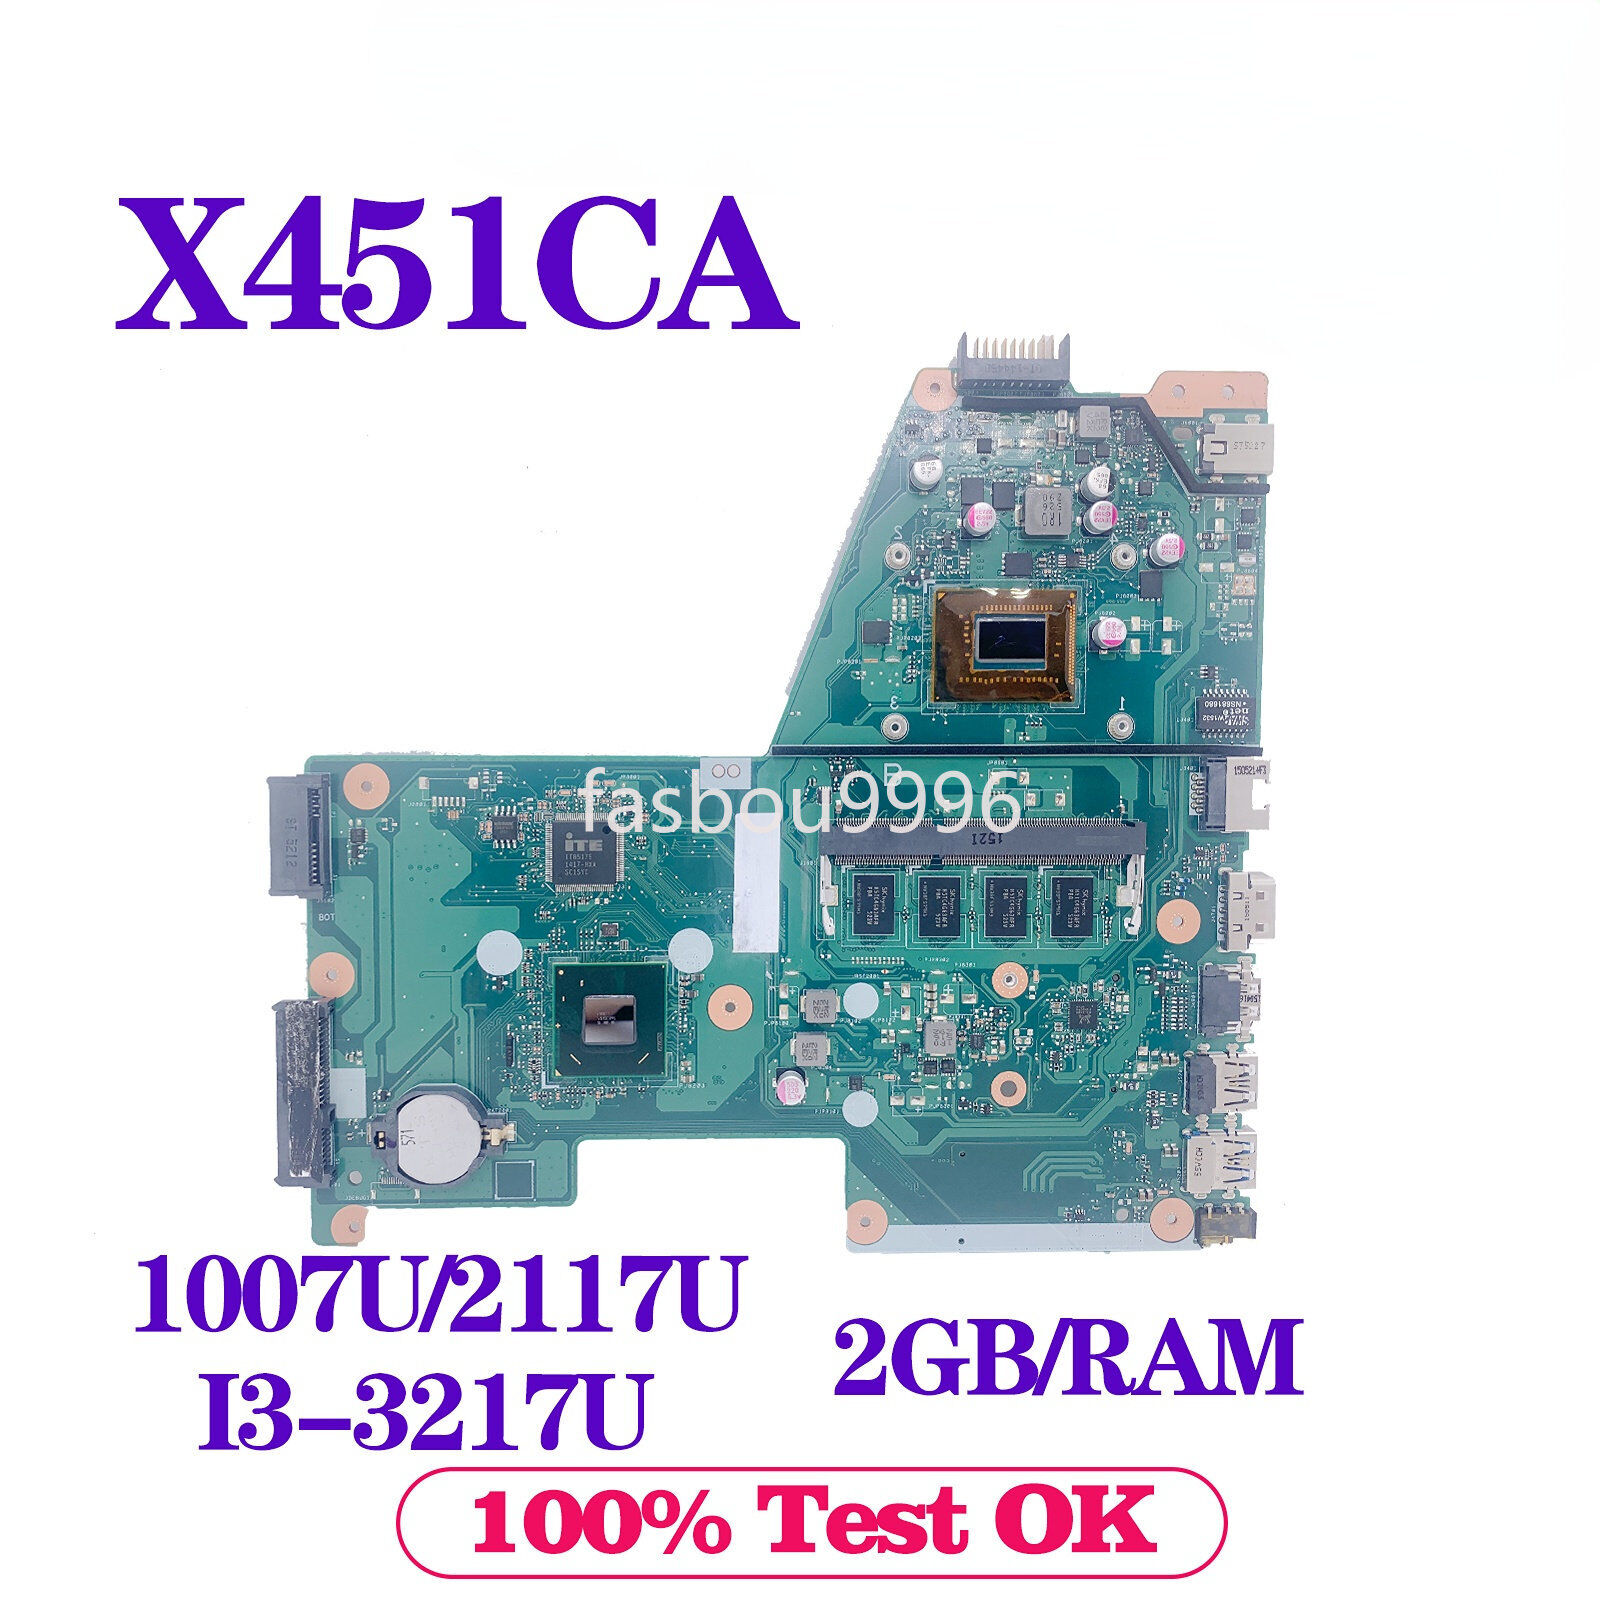 X451C For ASUS X451CA F451C Motherboard CPU 1007U/2117U/I3-3217U 0GB/2GB-RAM